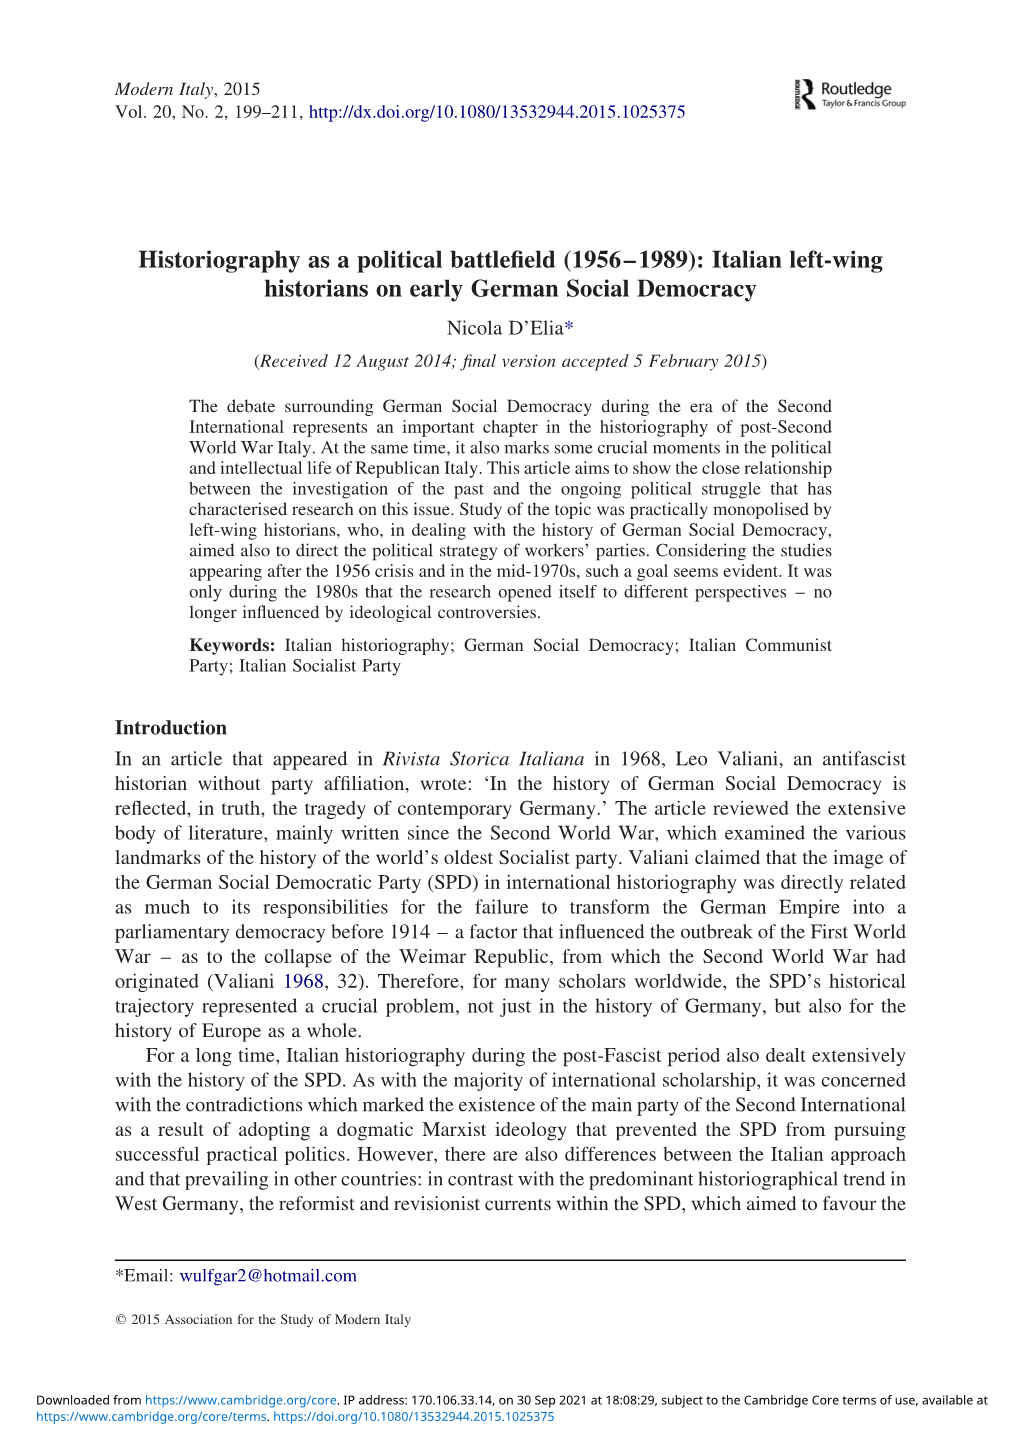 Historiography As a Political Battlefield